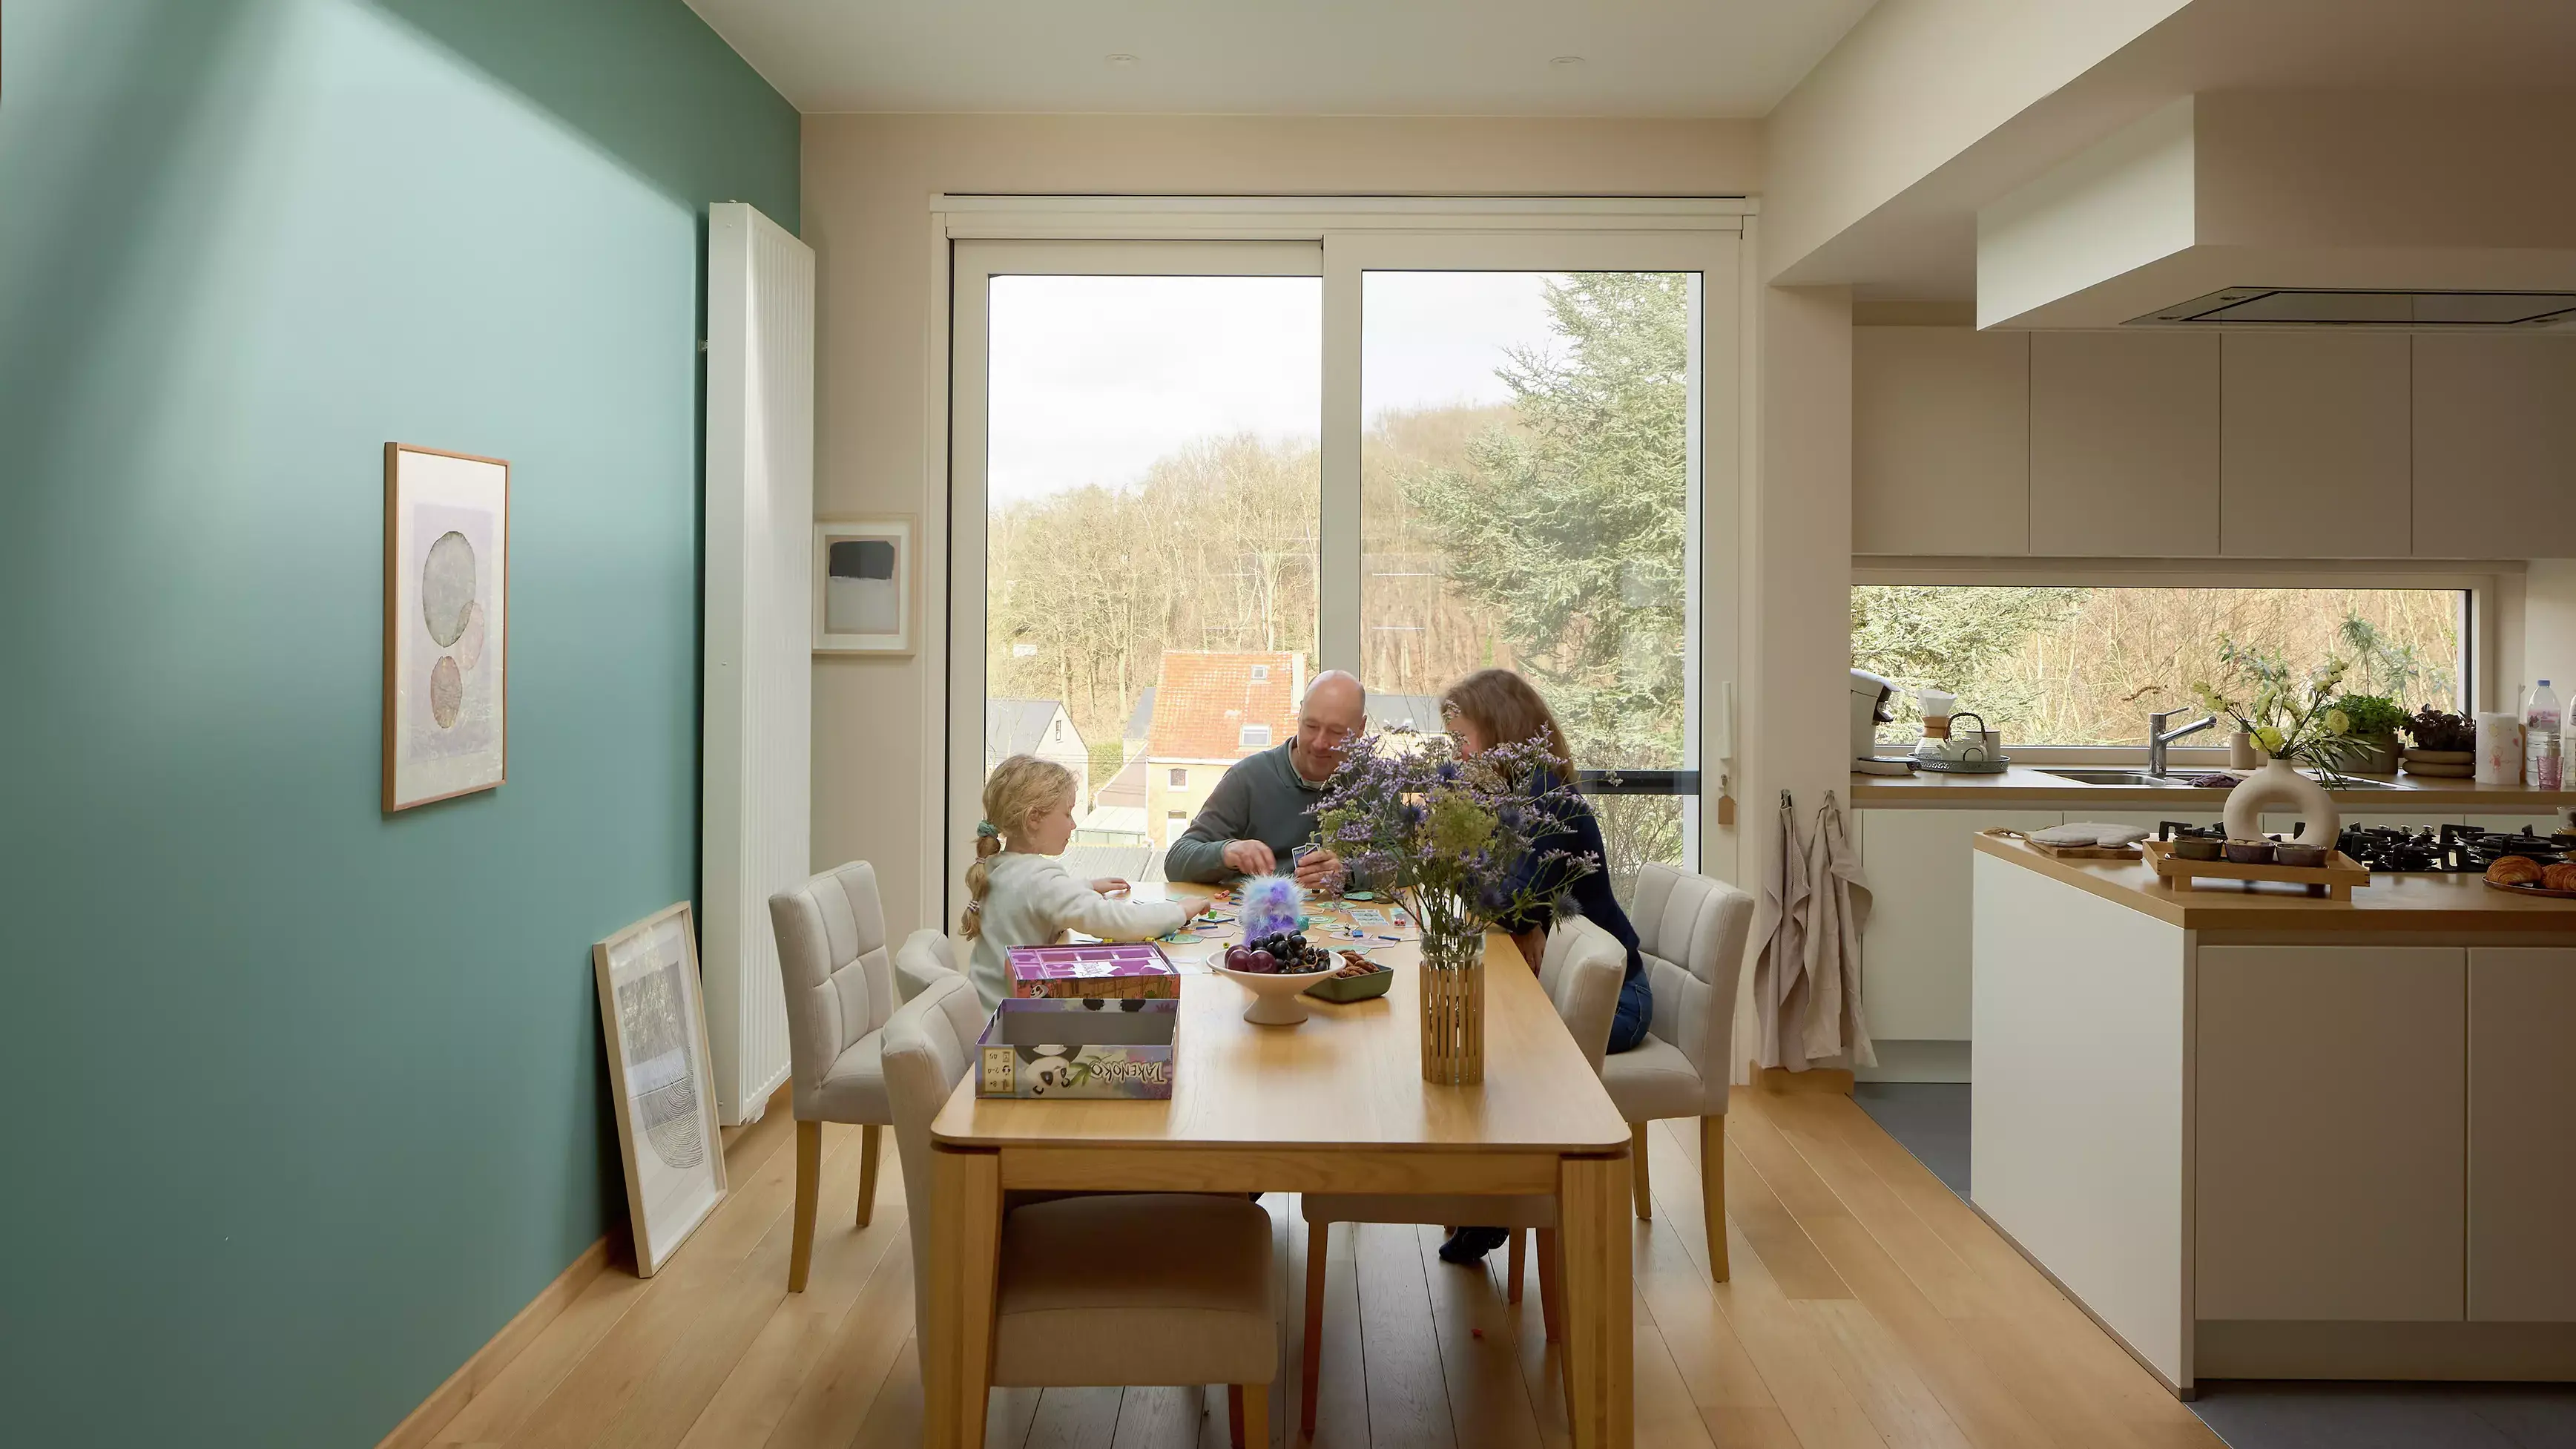 Salle à manger moderne avec famille, vue sur grande fenêtre et cuisine adjacente.